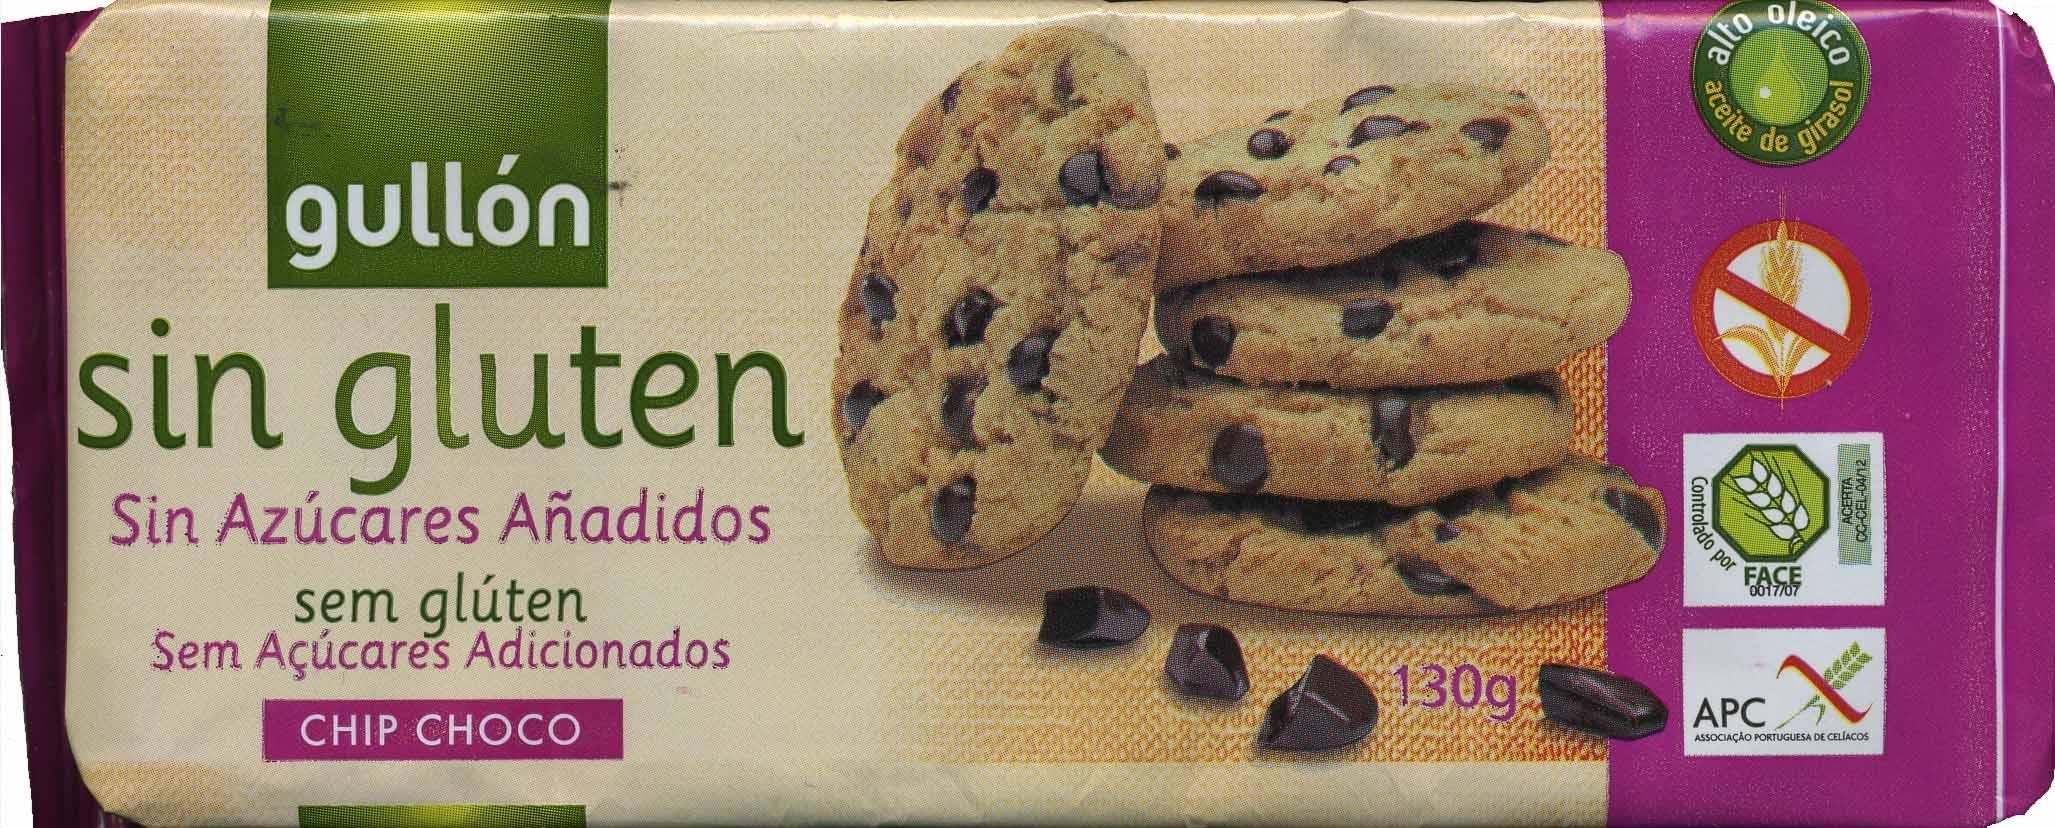 Cookies sin glúten sin azúcares añadidos - Producto